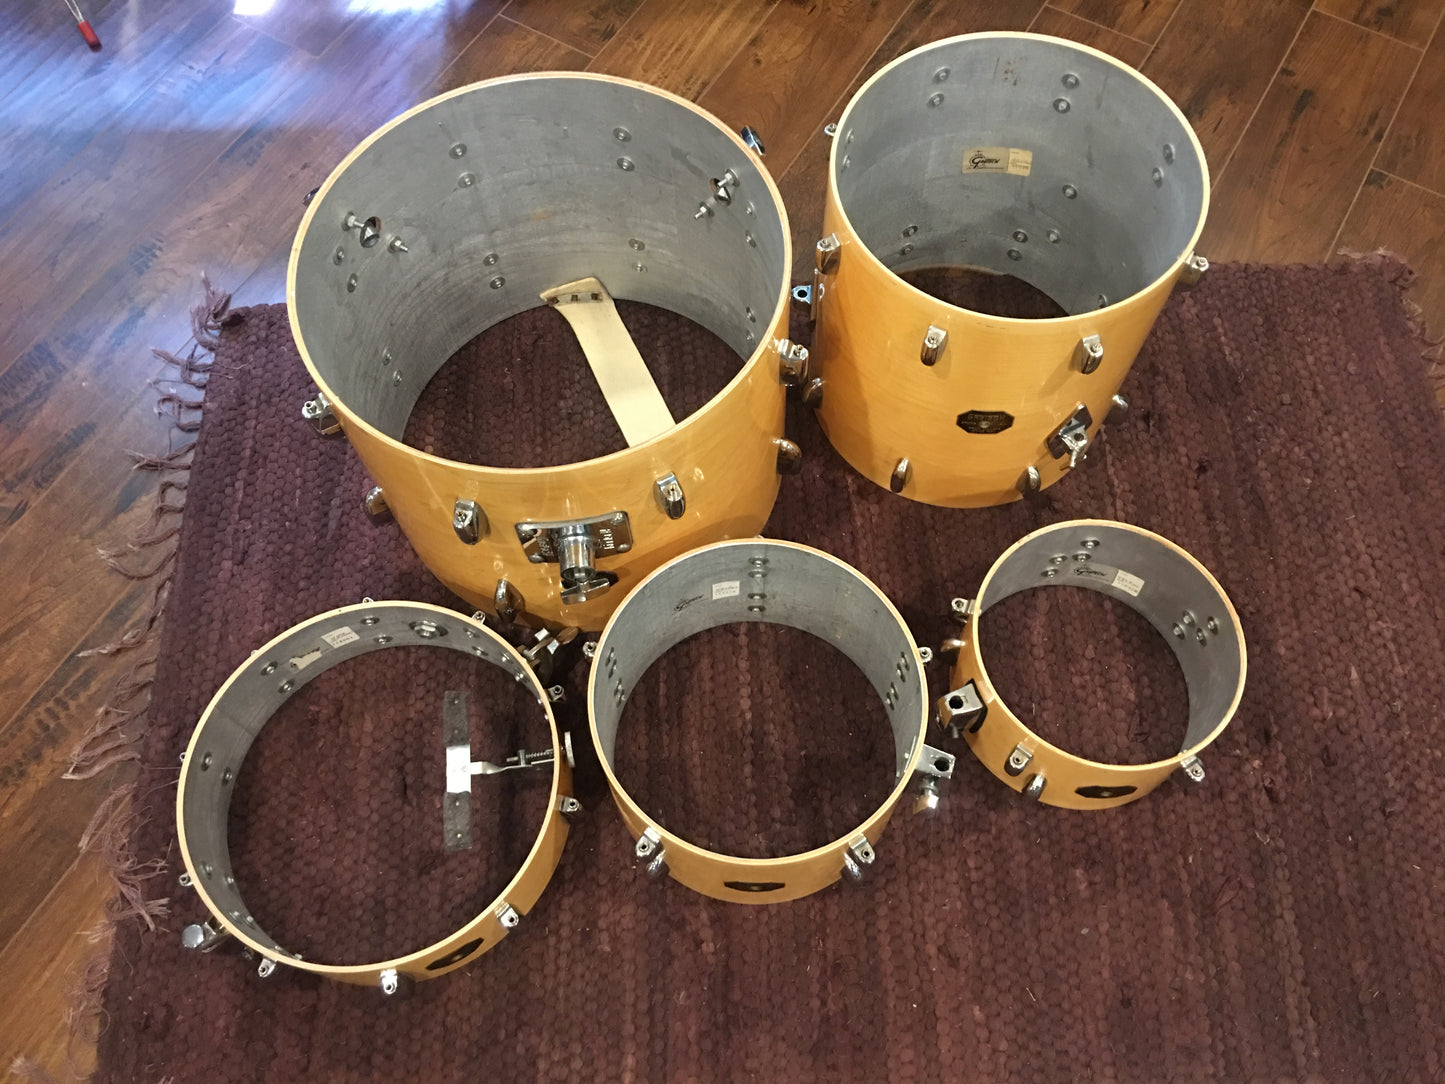 Gretsch Stop Sign Bop Drum Set 18/10/12/14/5x14 Snare Natural Maple